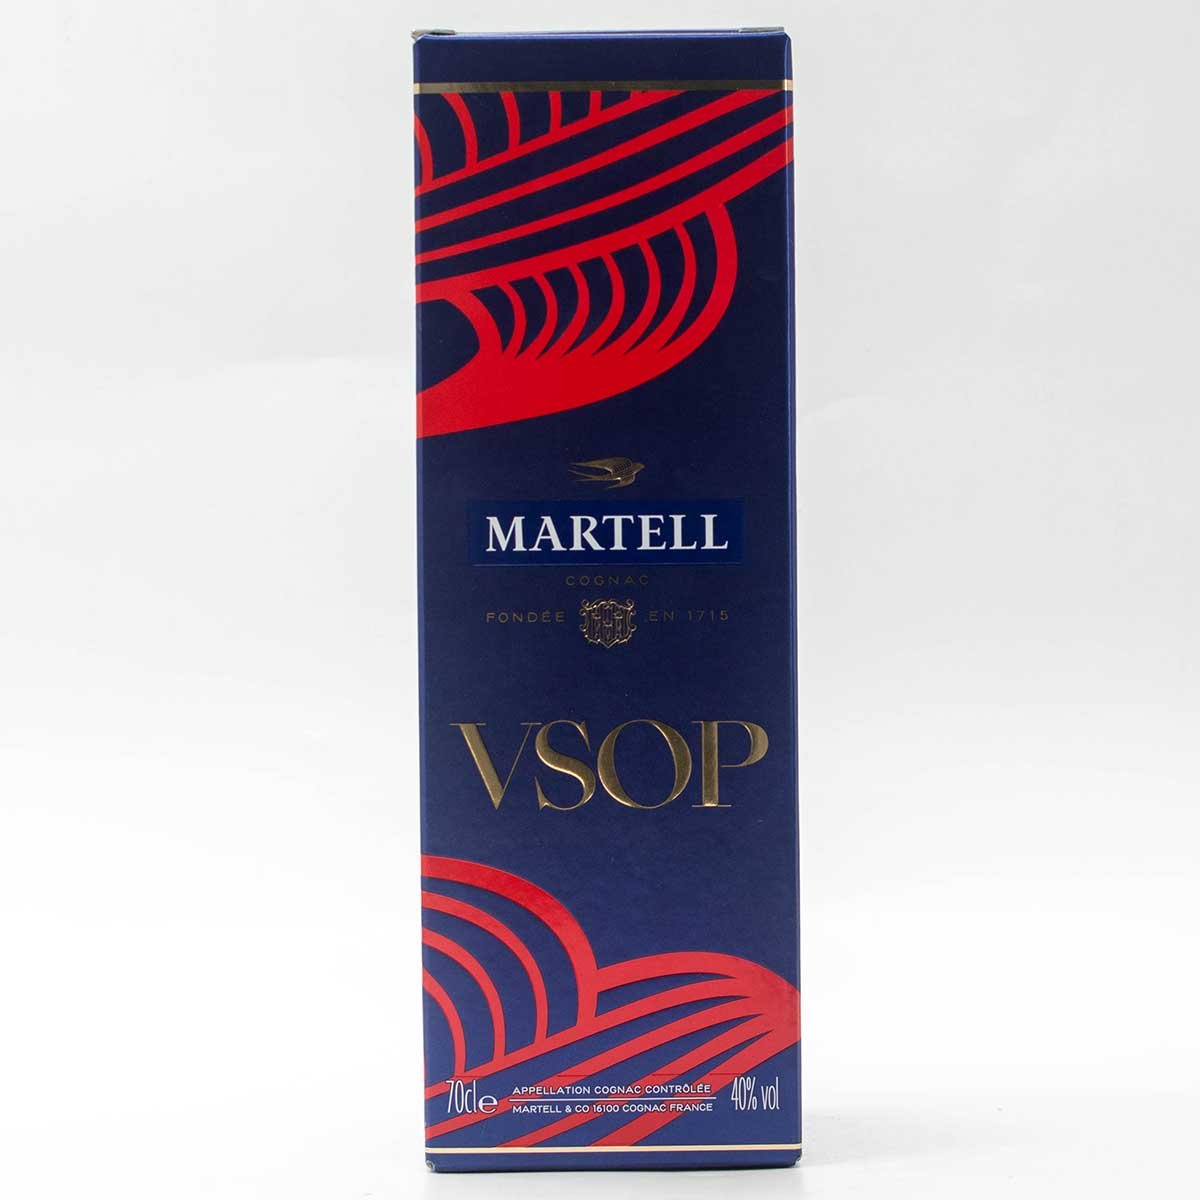 Martell vsop 0.7. Мартель ВСОП 0,7 Л. Коньяк Мартель VSOP 0.7. Martell VSOP 0.7 цена.